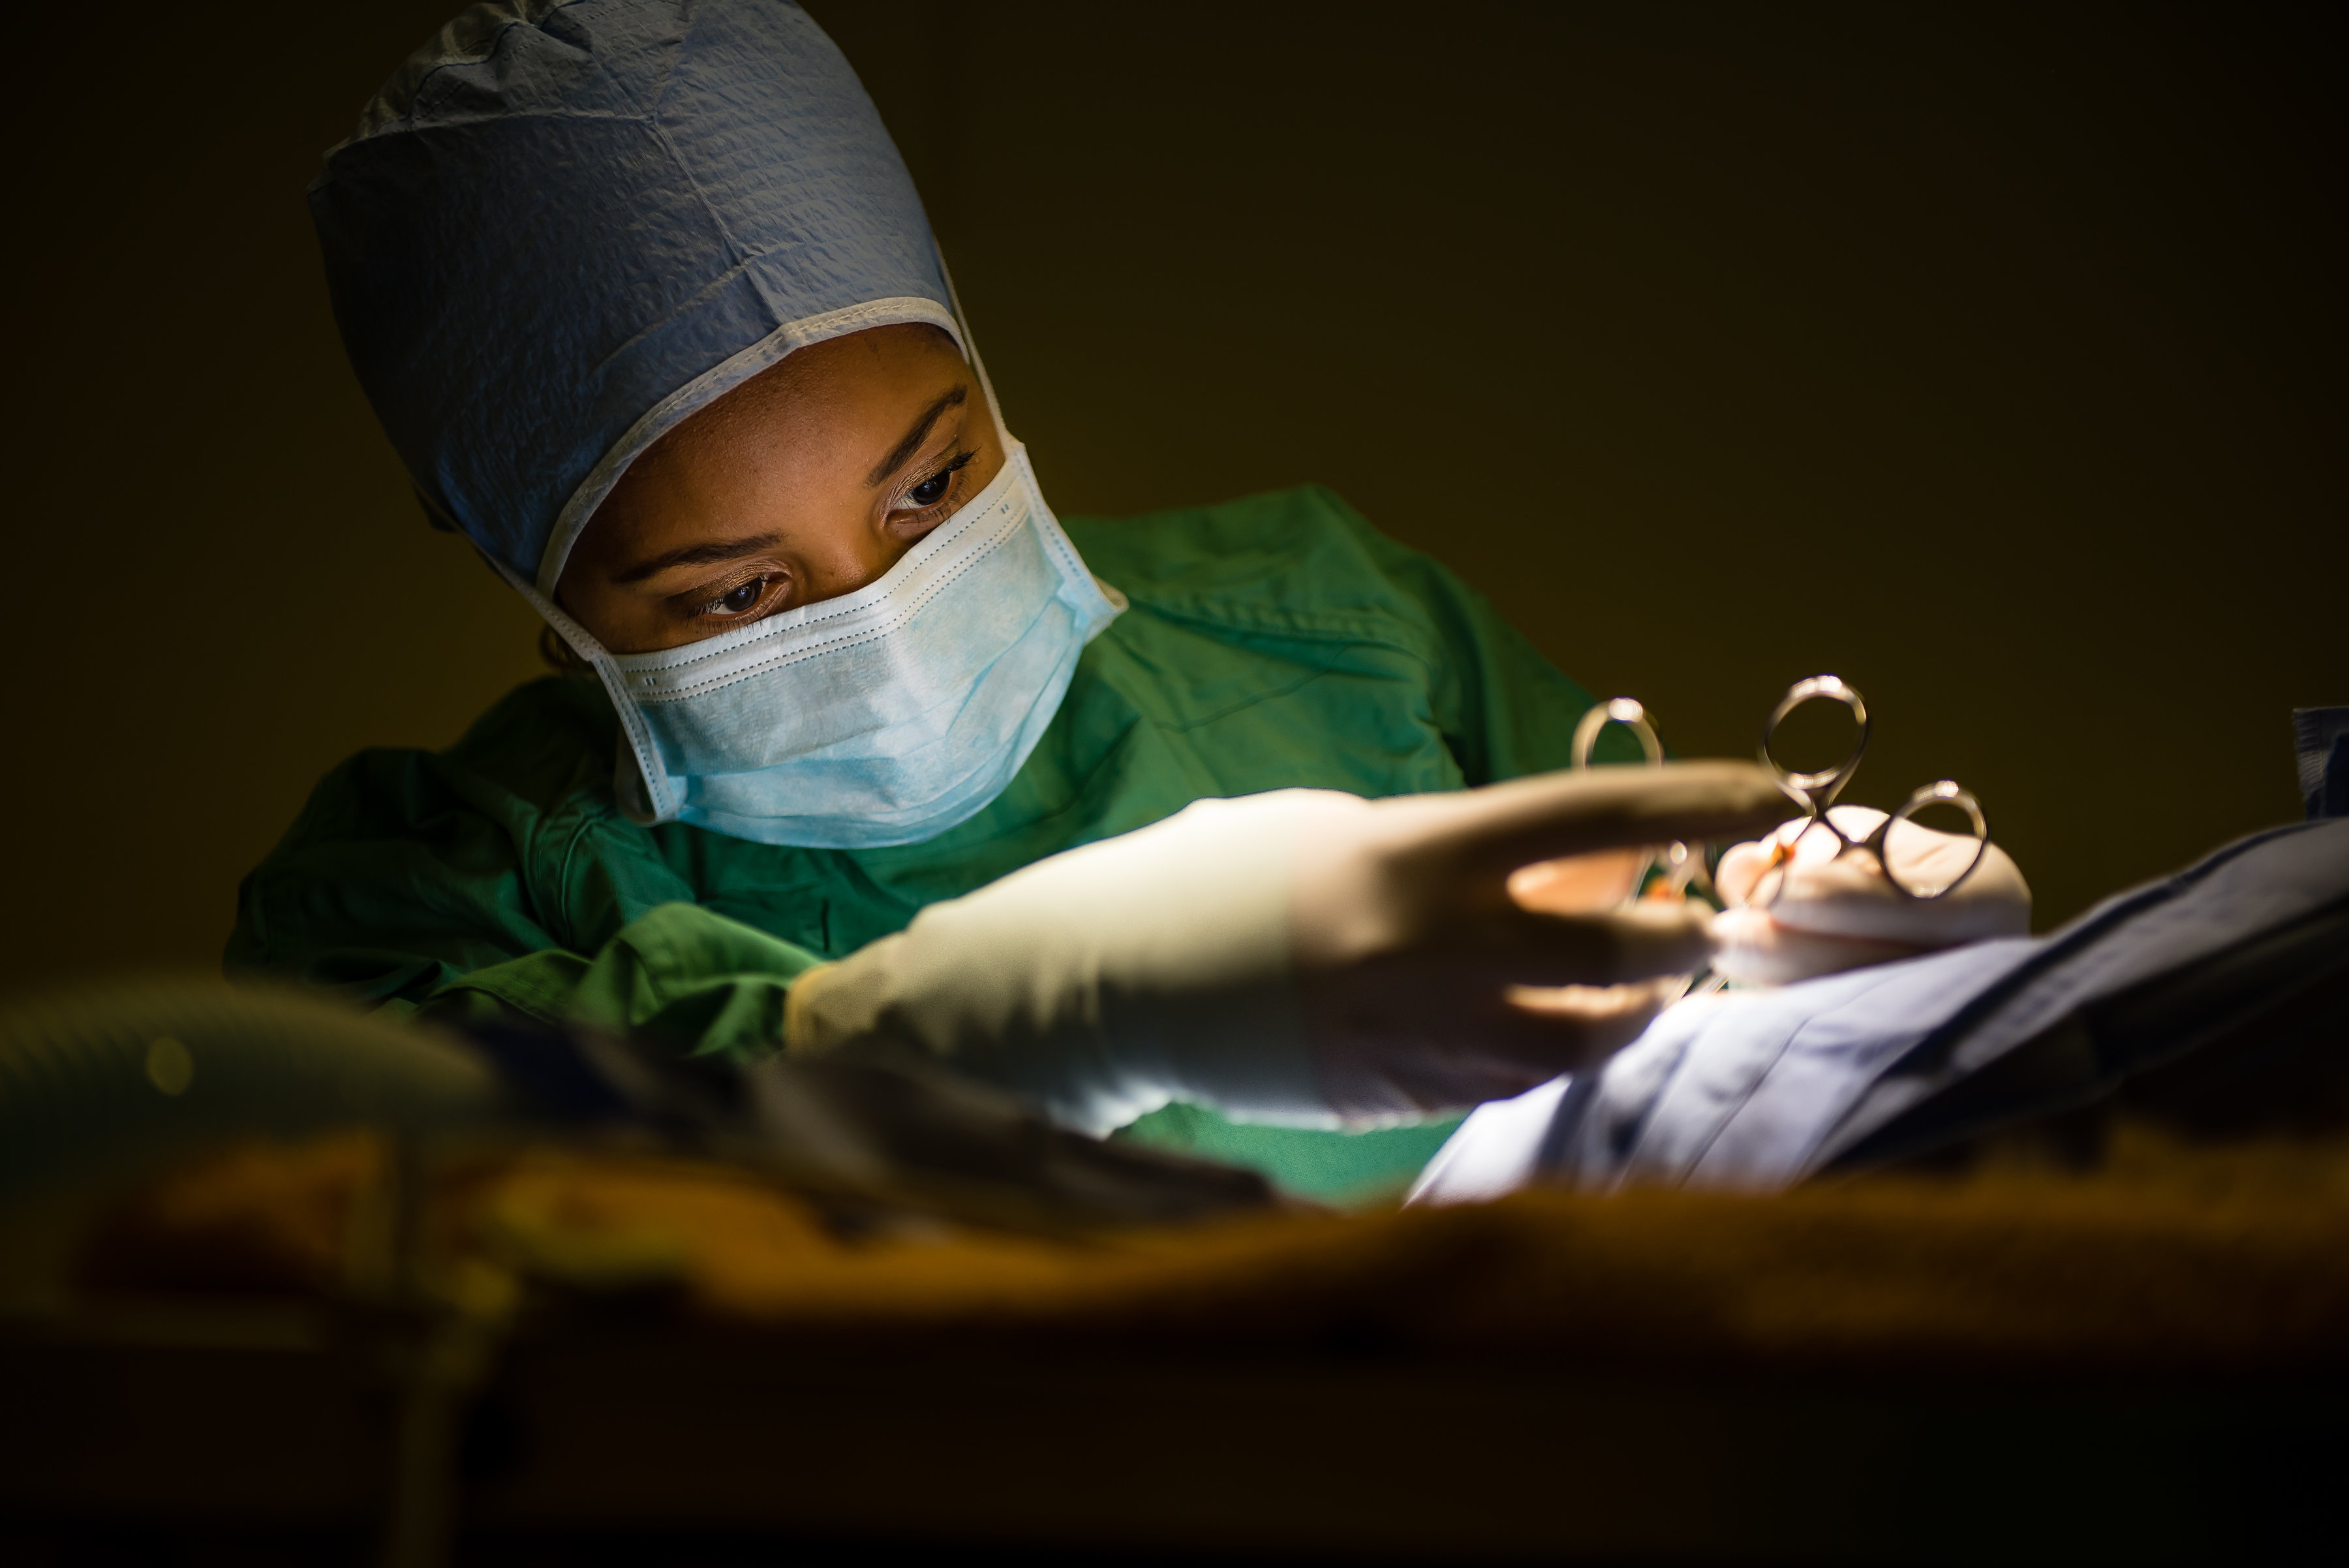 Dr. Mattaur performing surgery